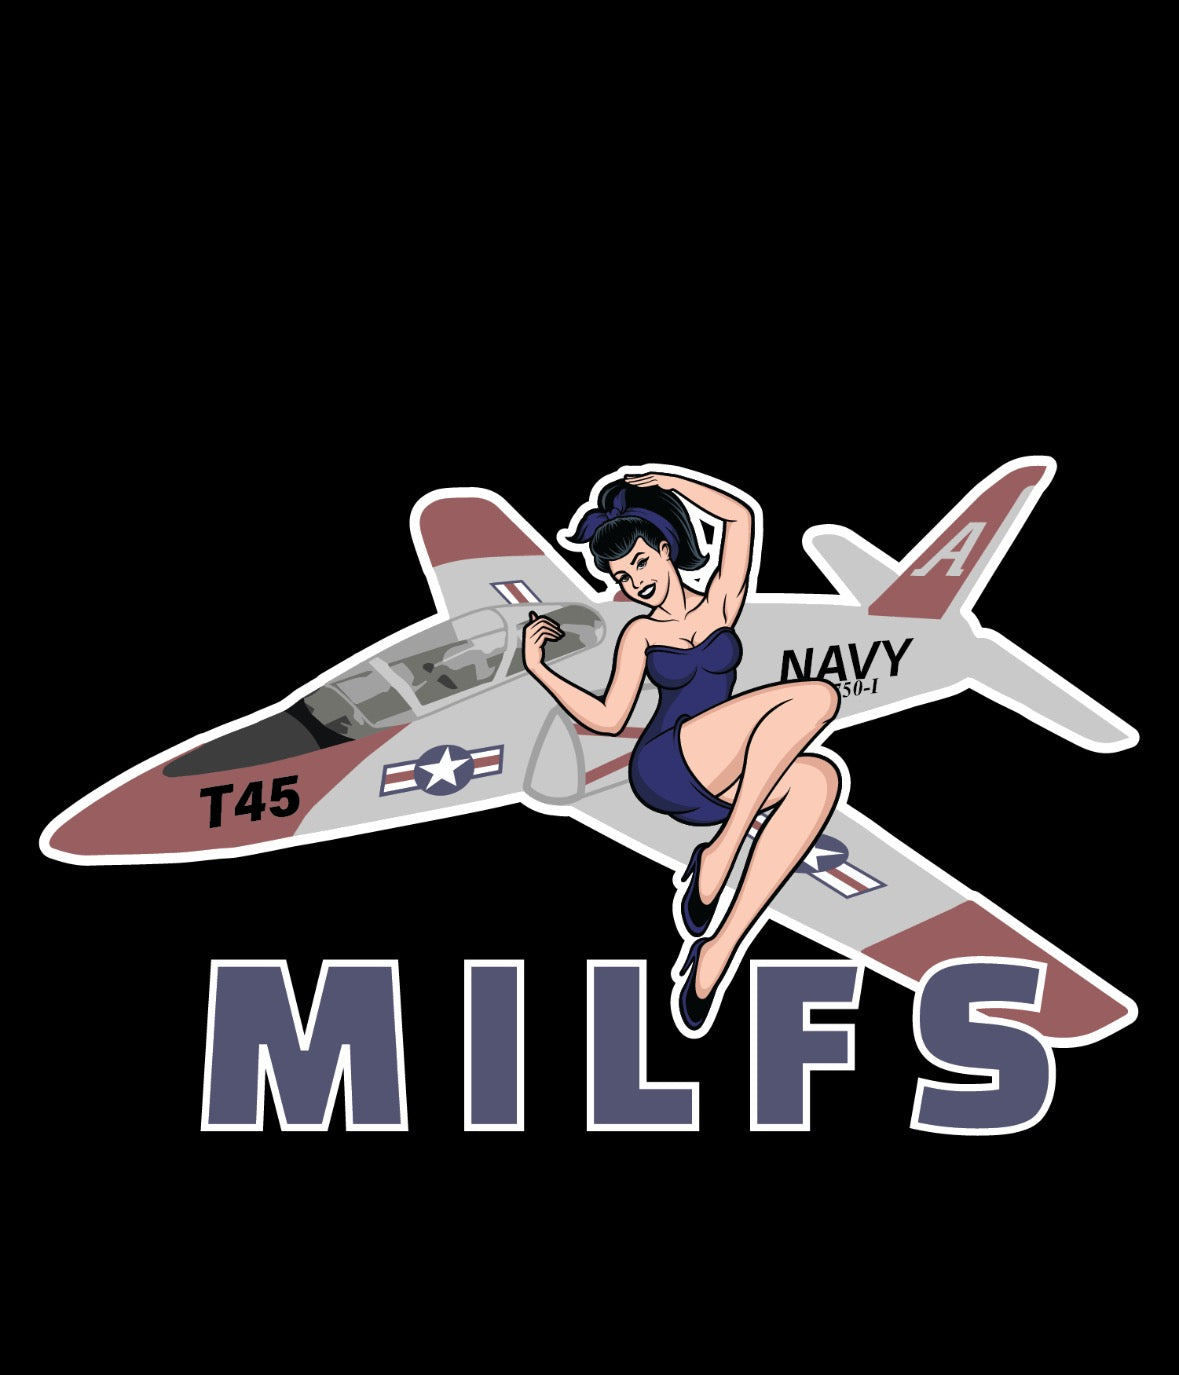 MILFS T45 Swag